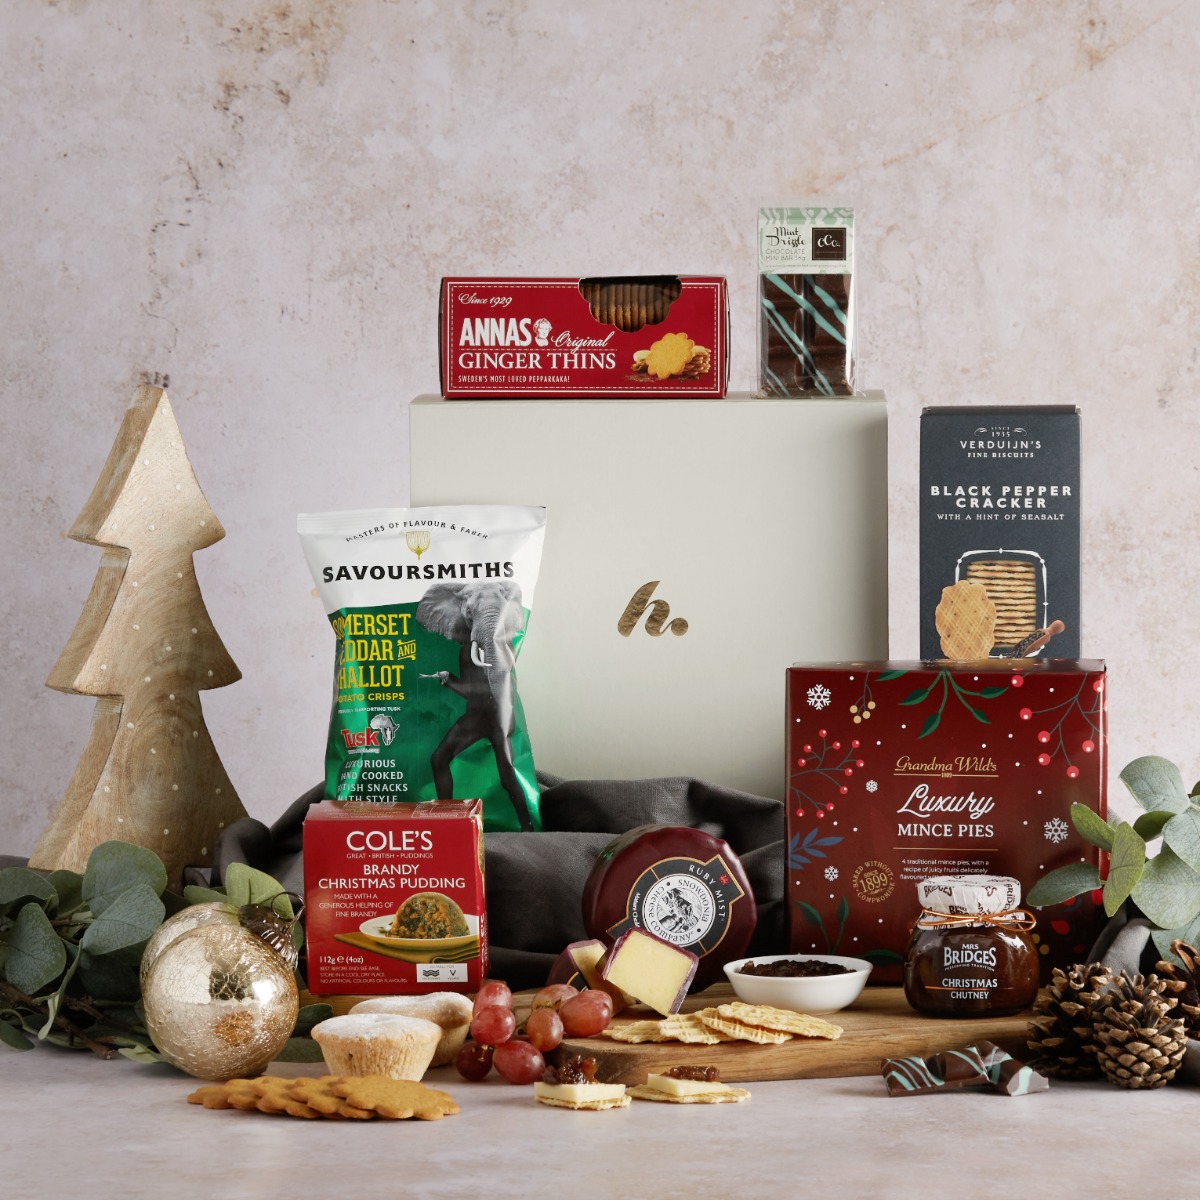 The Christmas Season Selection with contents on display